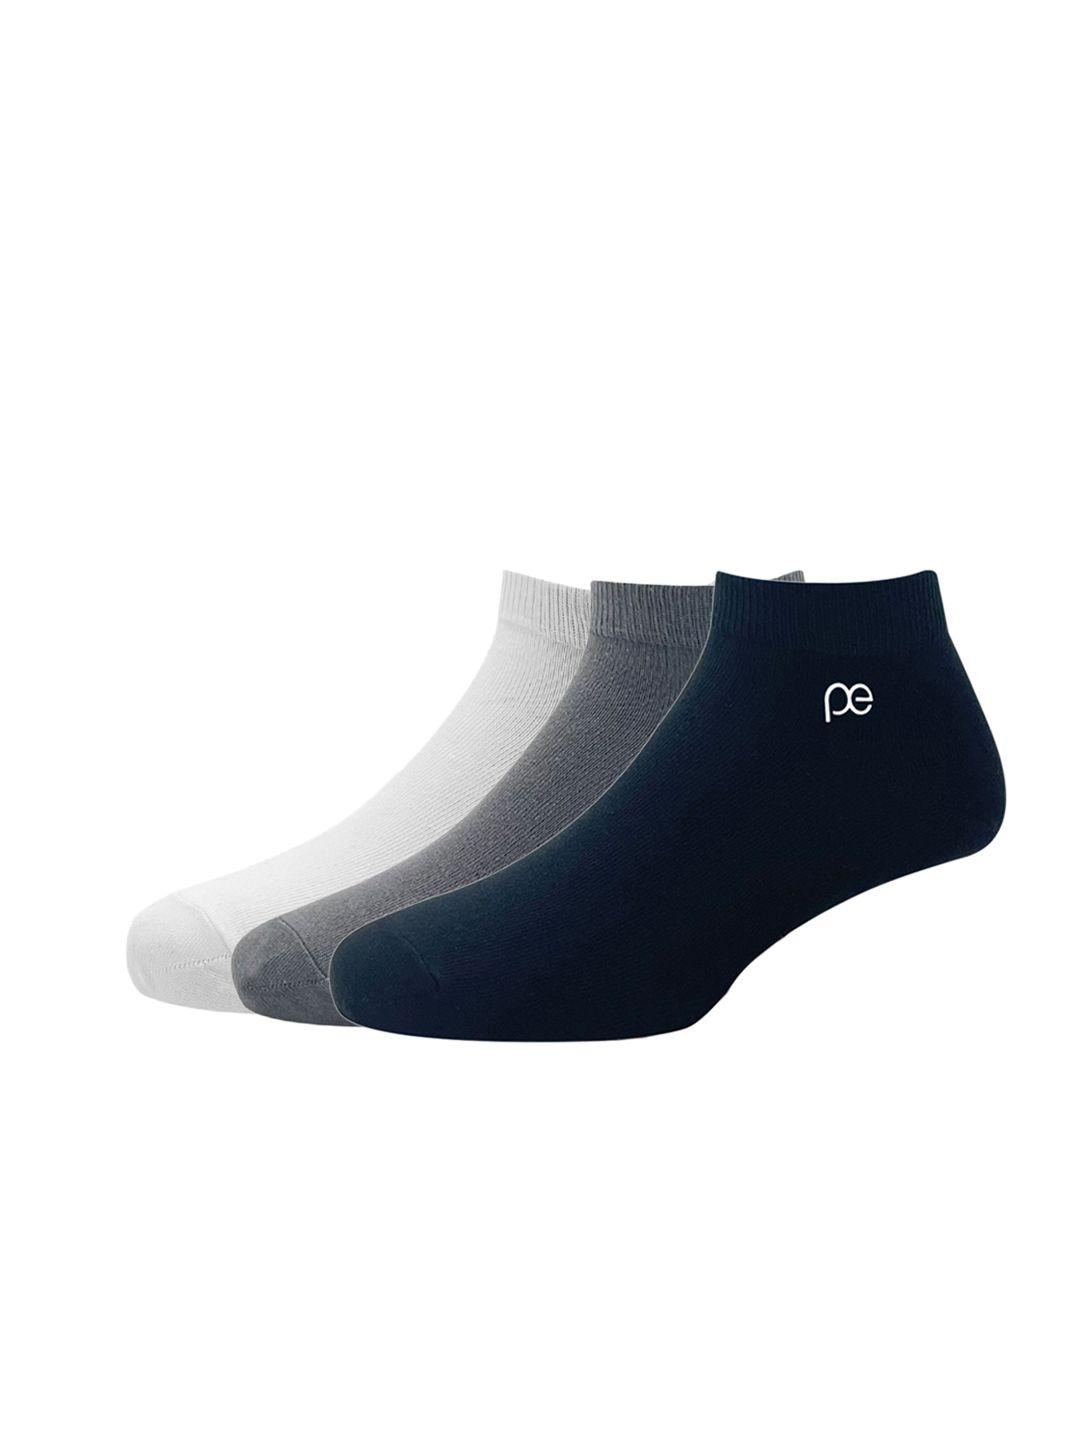 peter-england-men-white-&-grey-pack-of-3-cotton-ankle-length-socks